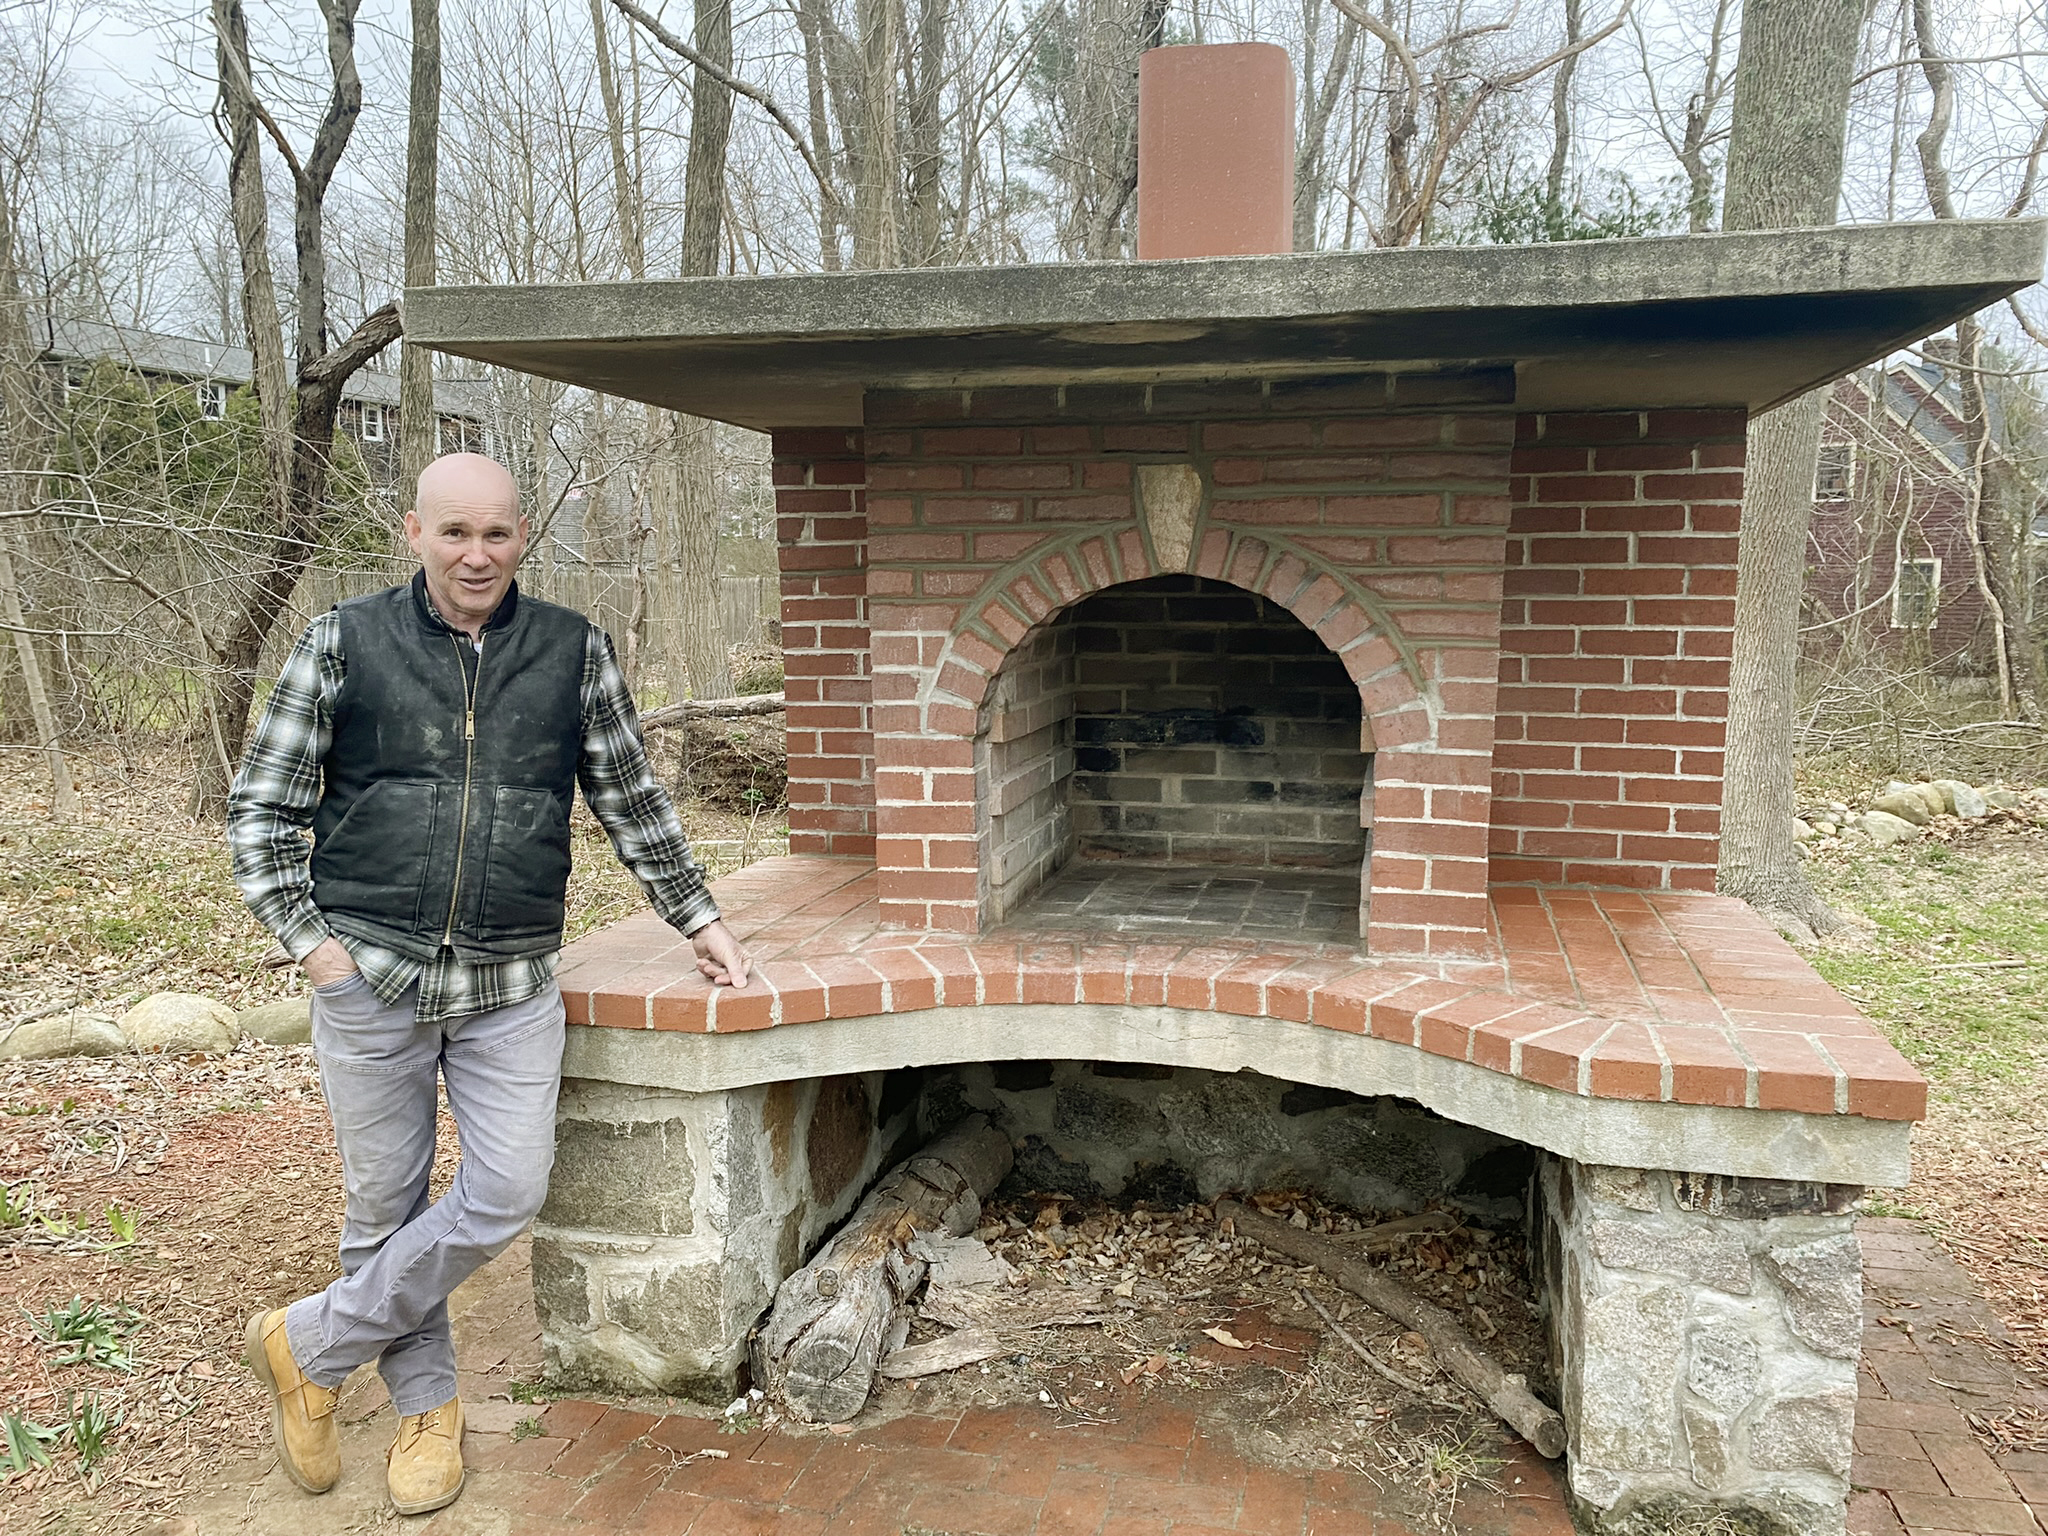 S20 E39, Mark McCullough repairs an outdoor pizza oven